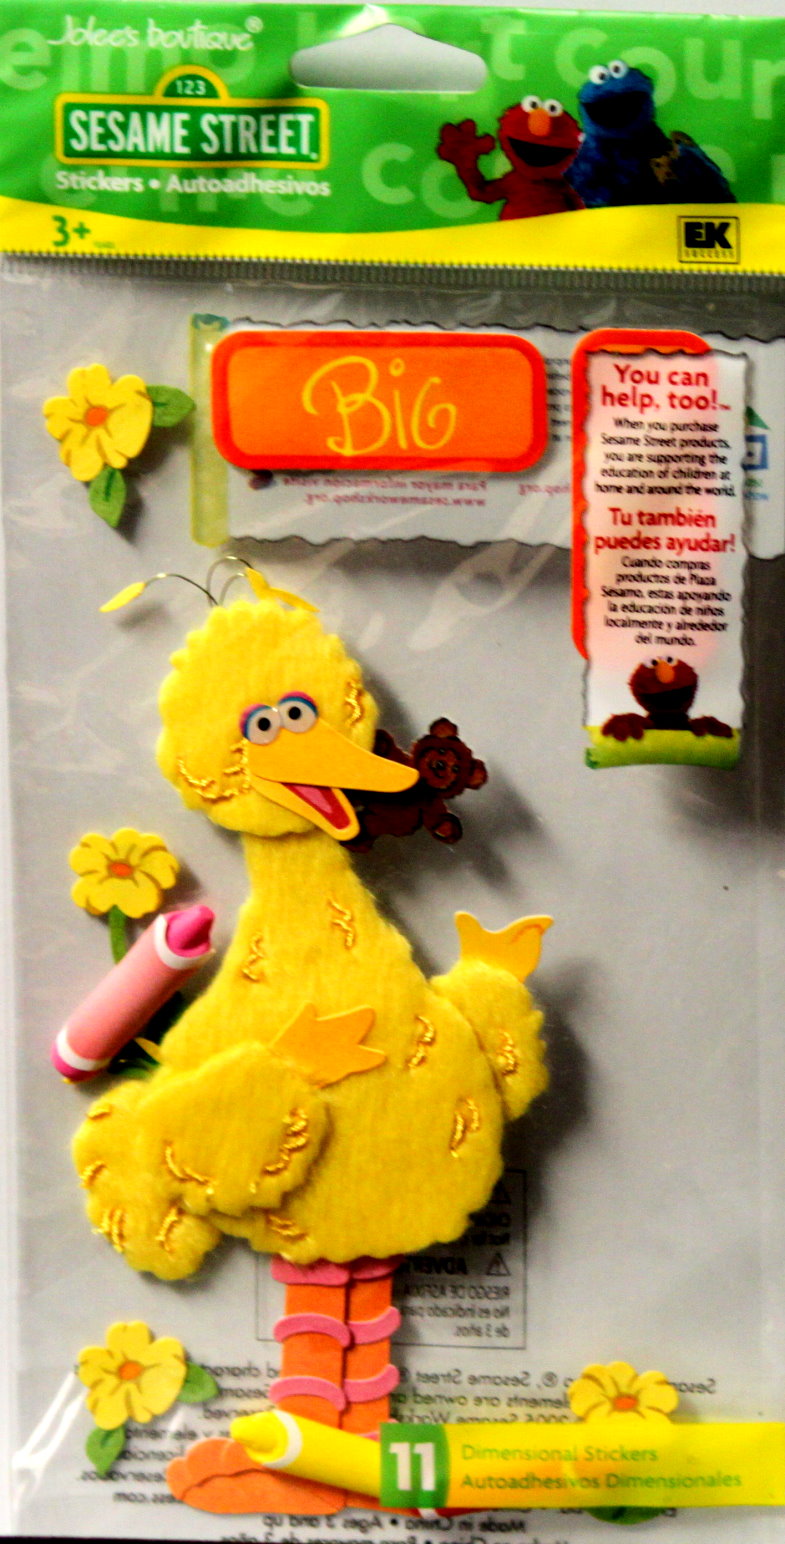 Jolee's Boutique Sesame Street Big Bird Dimensional Stickers